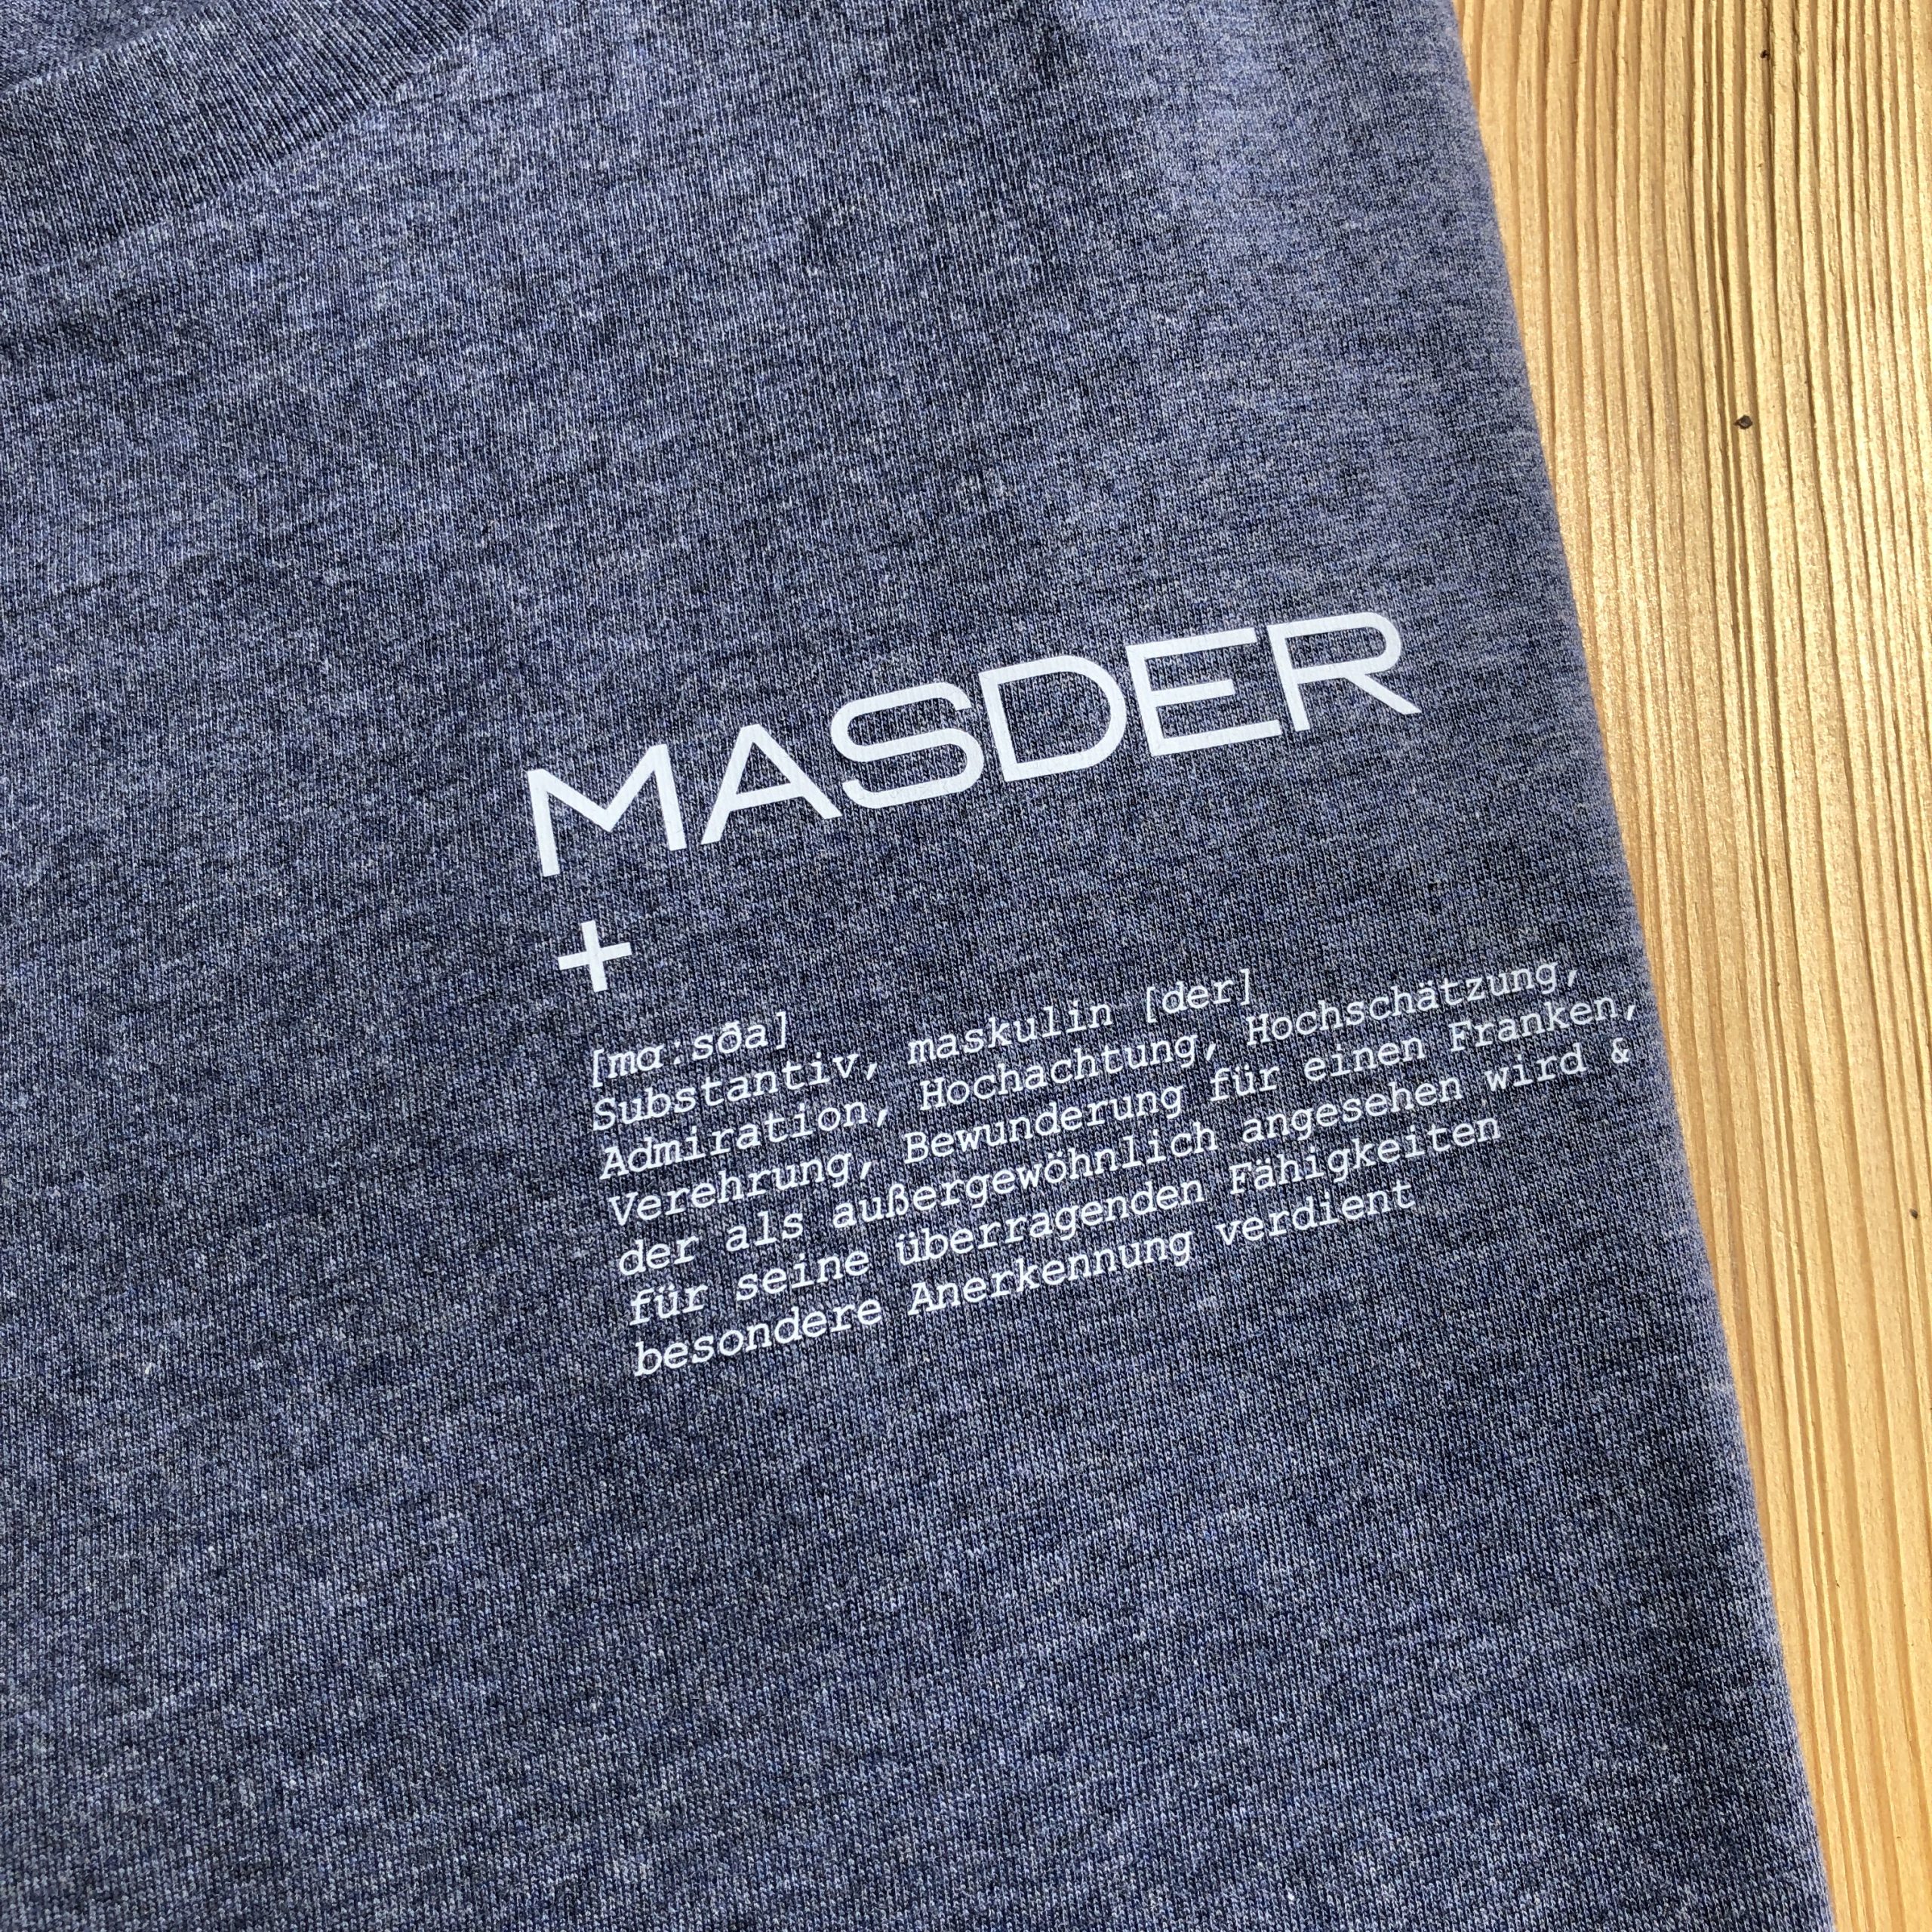 Masder T-Shirt Lexikon Frankenstyle Fränkische Herrenmode